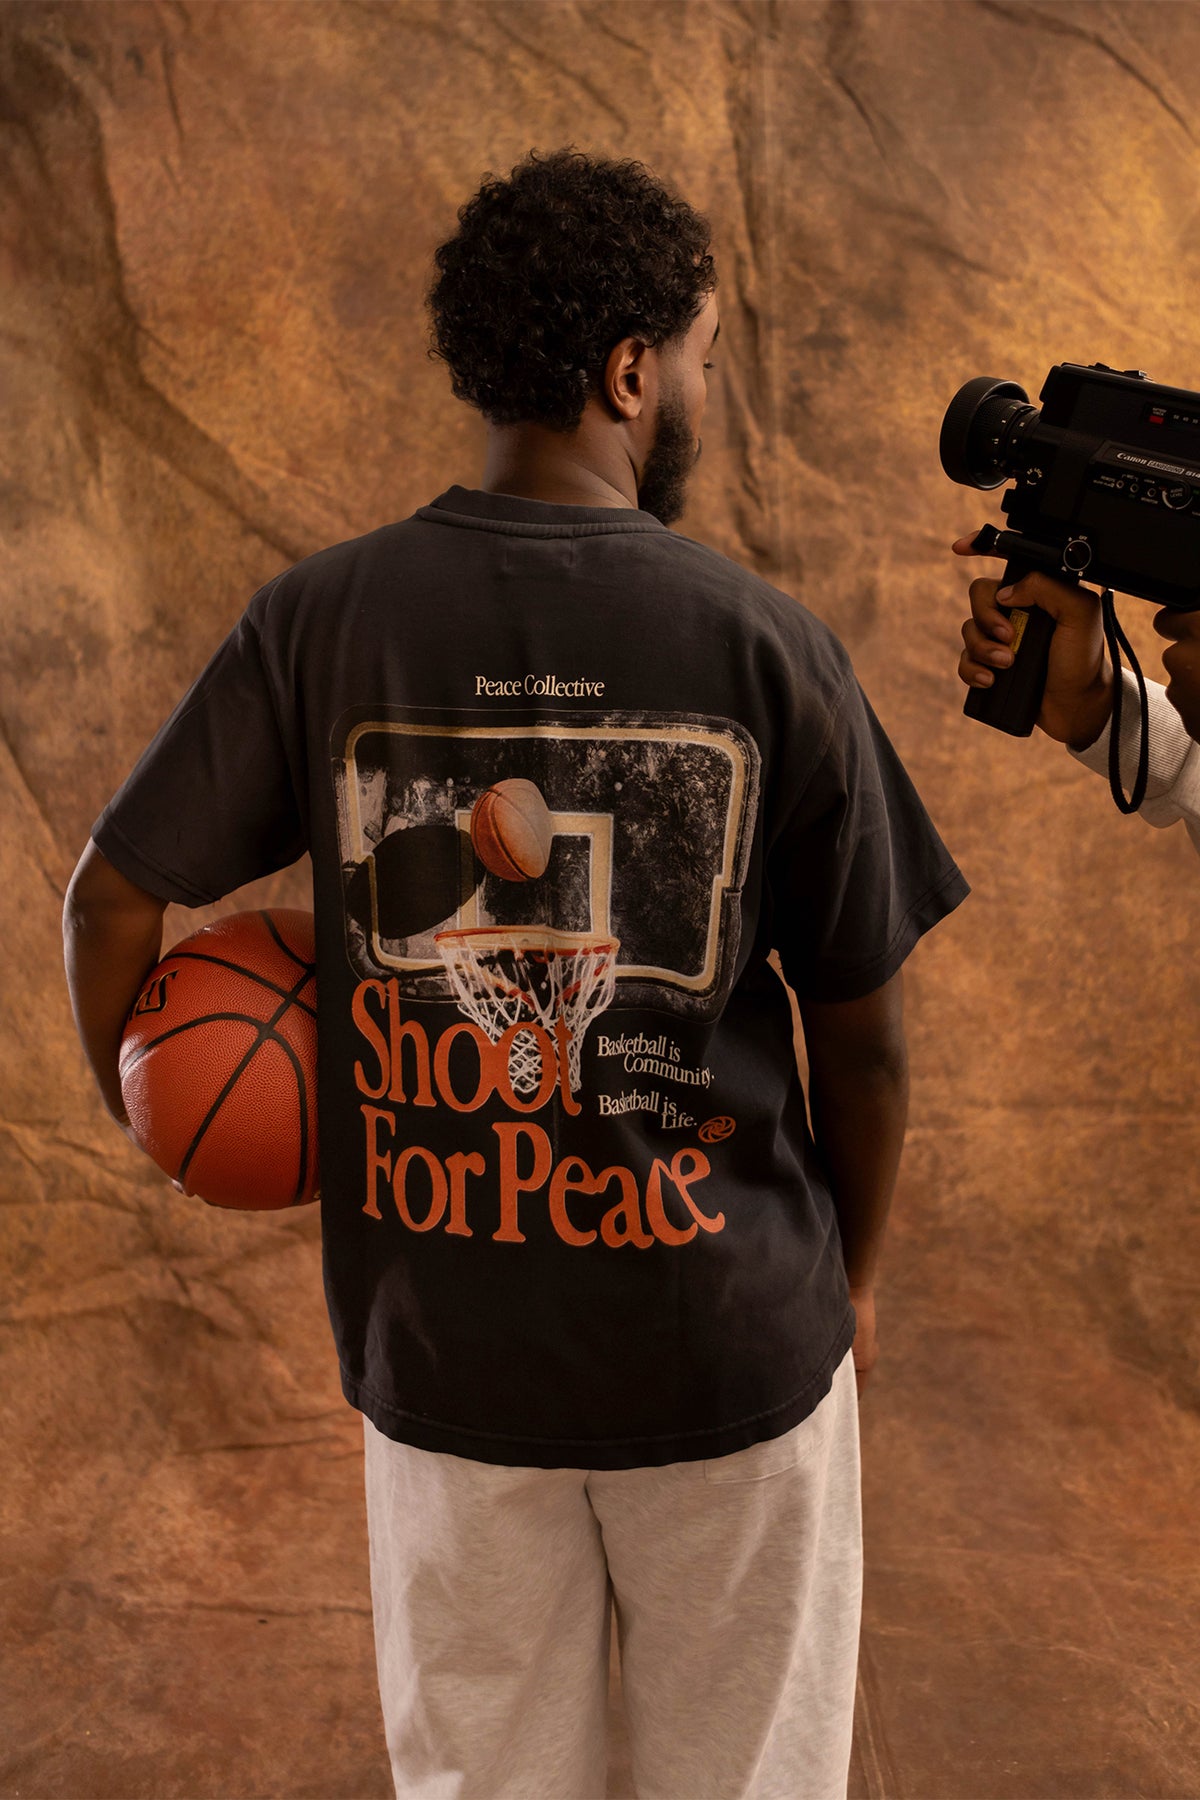 NBA x Shoot For Peace Garment Dyed Heavyweight T-Shirt - Black